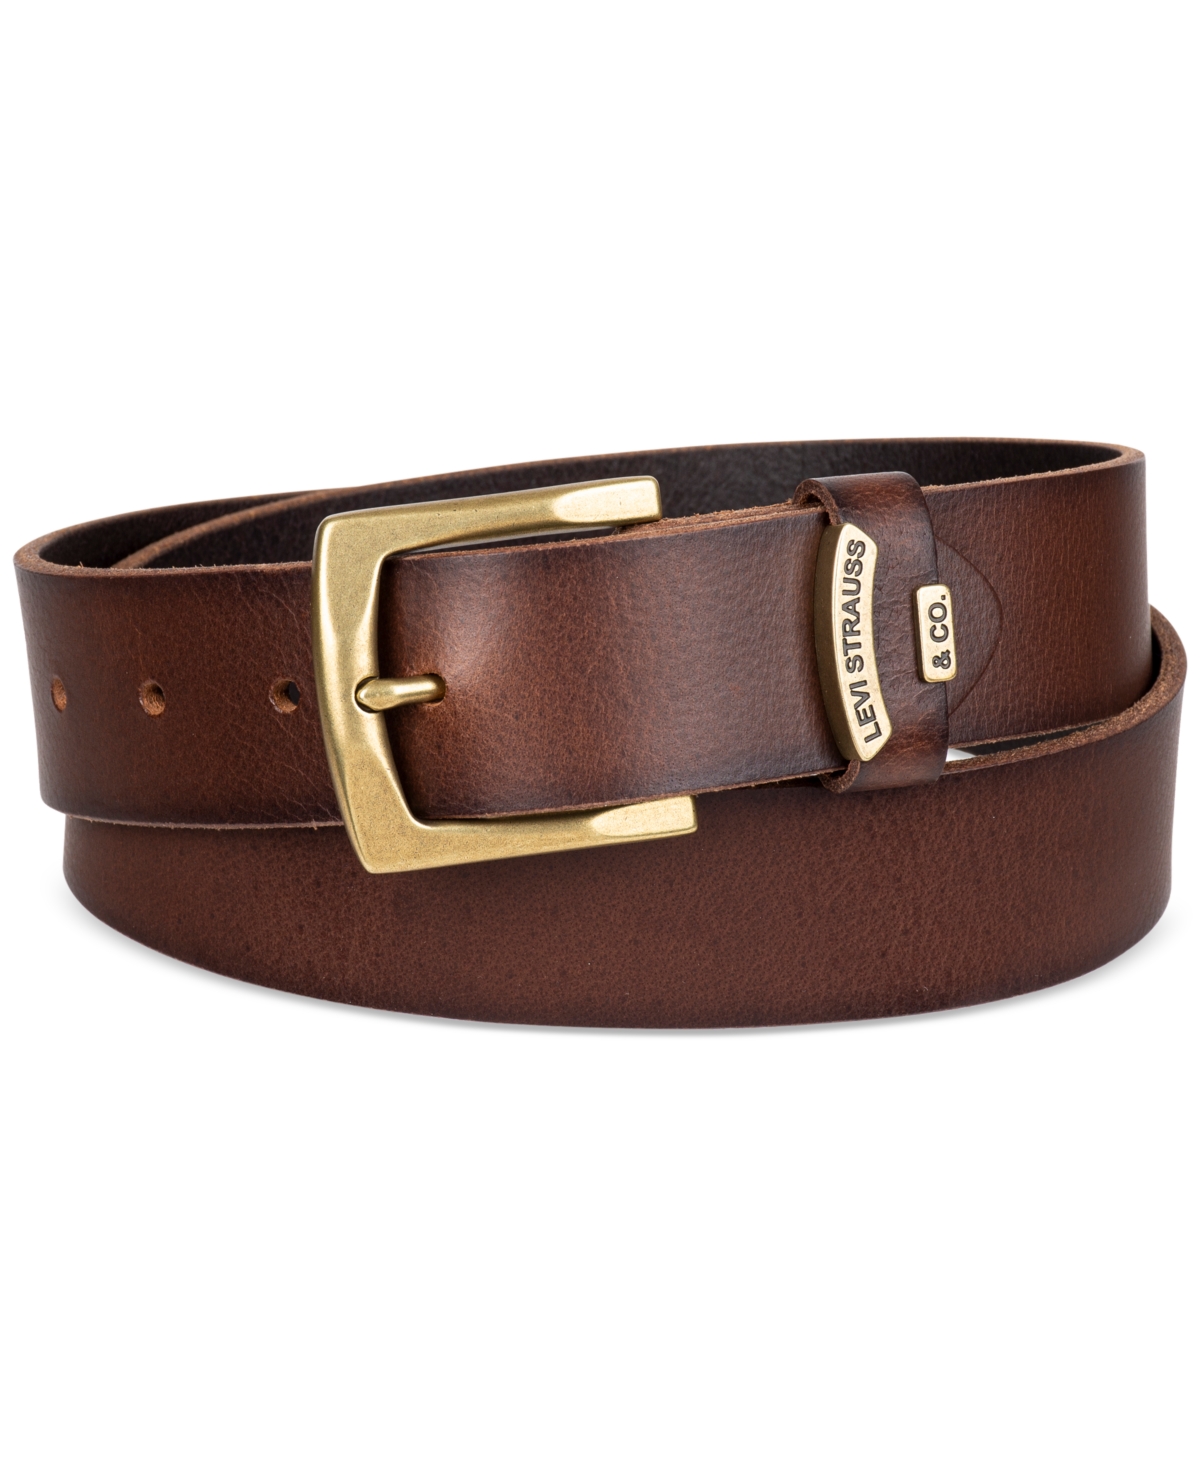 Men's Gold Buckle Leather Belt - Brown